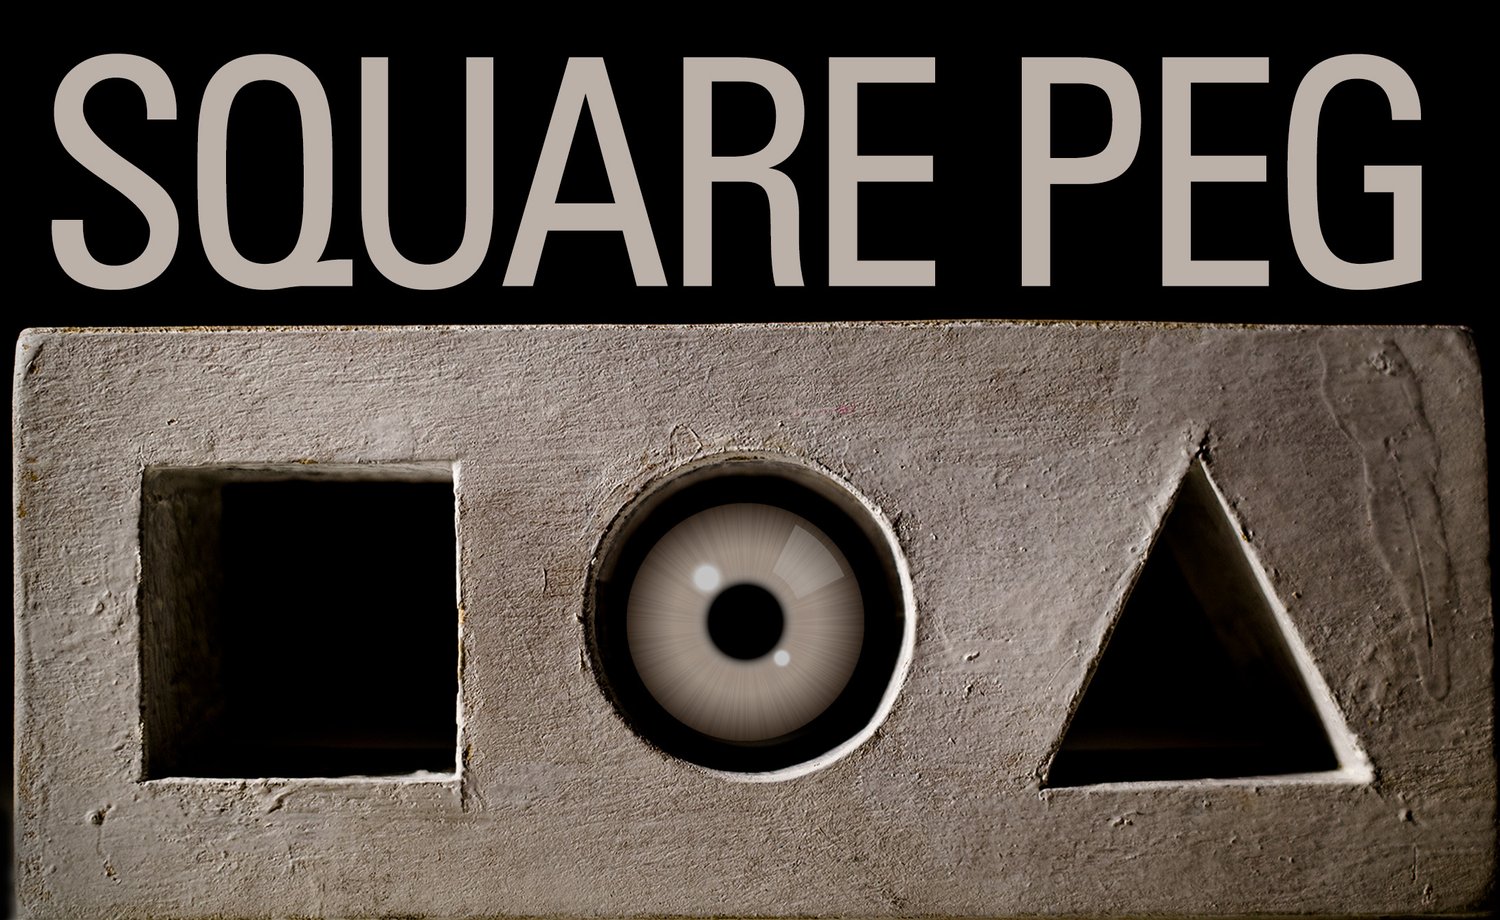 Square Peg Podcast